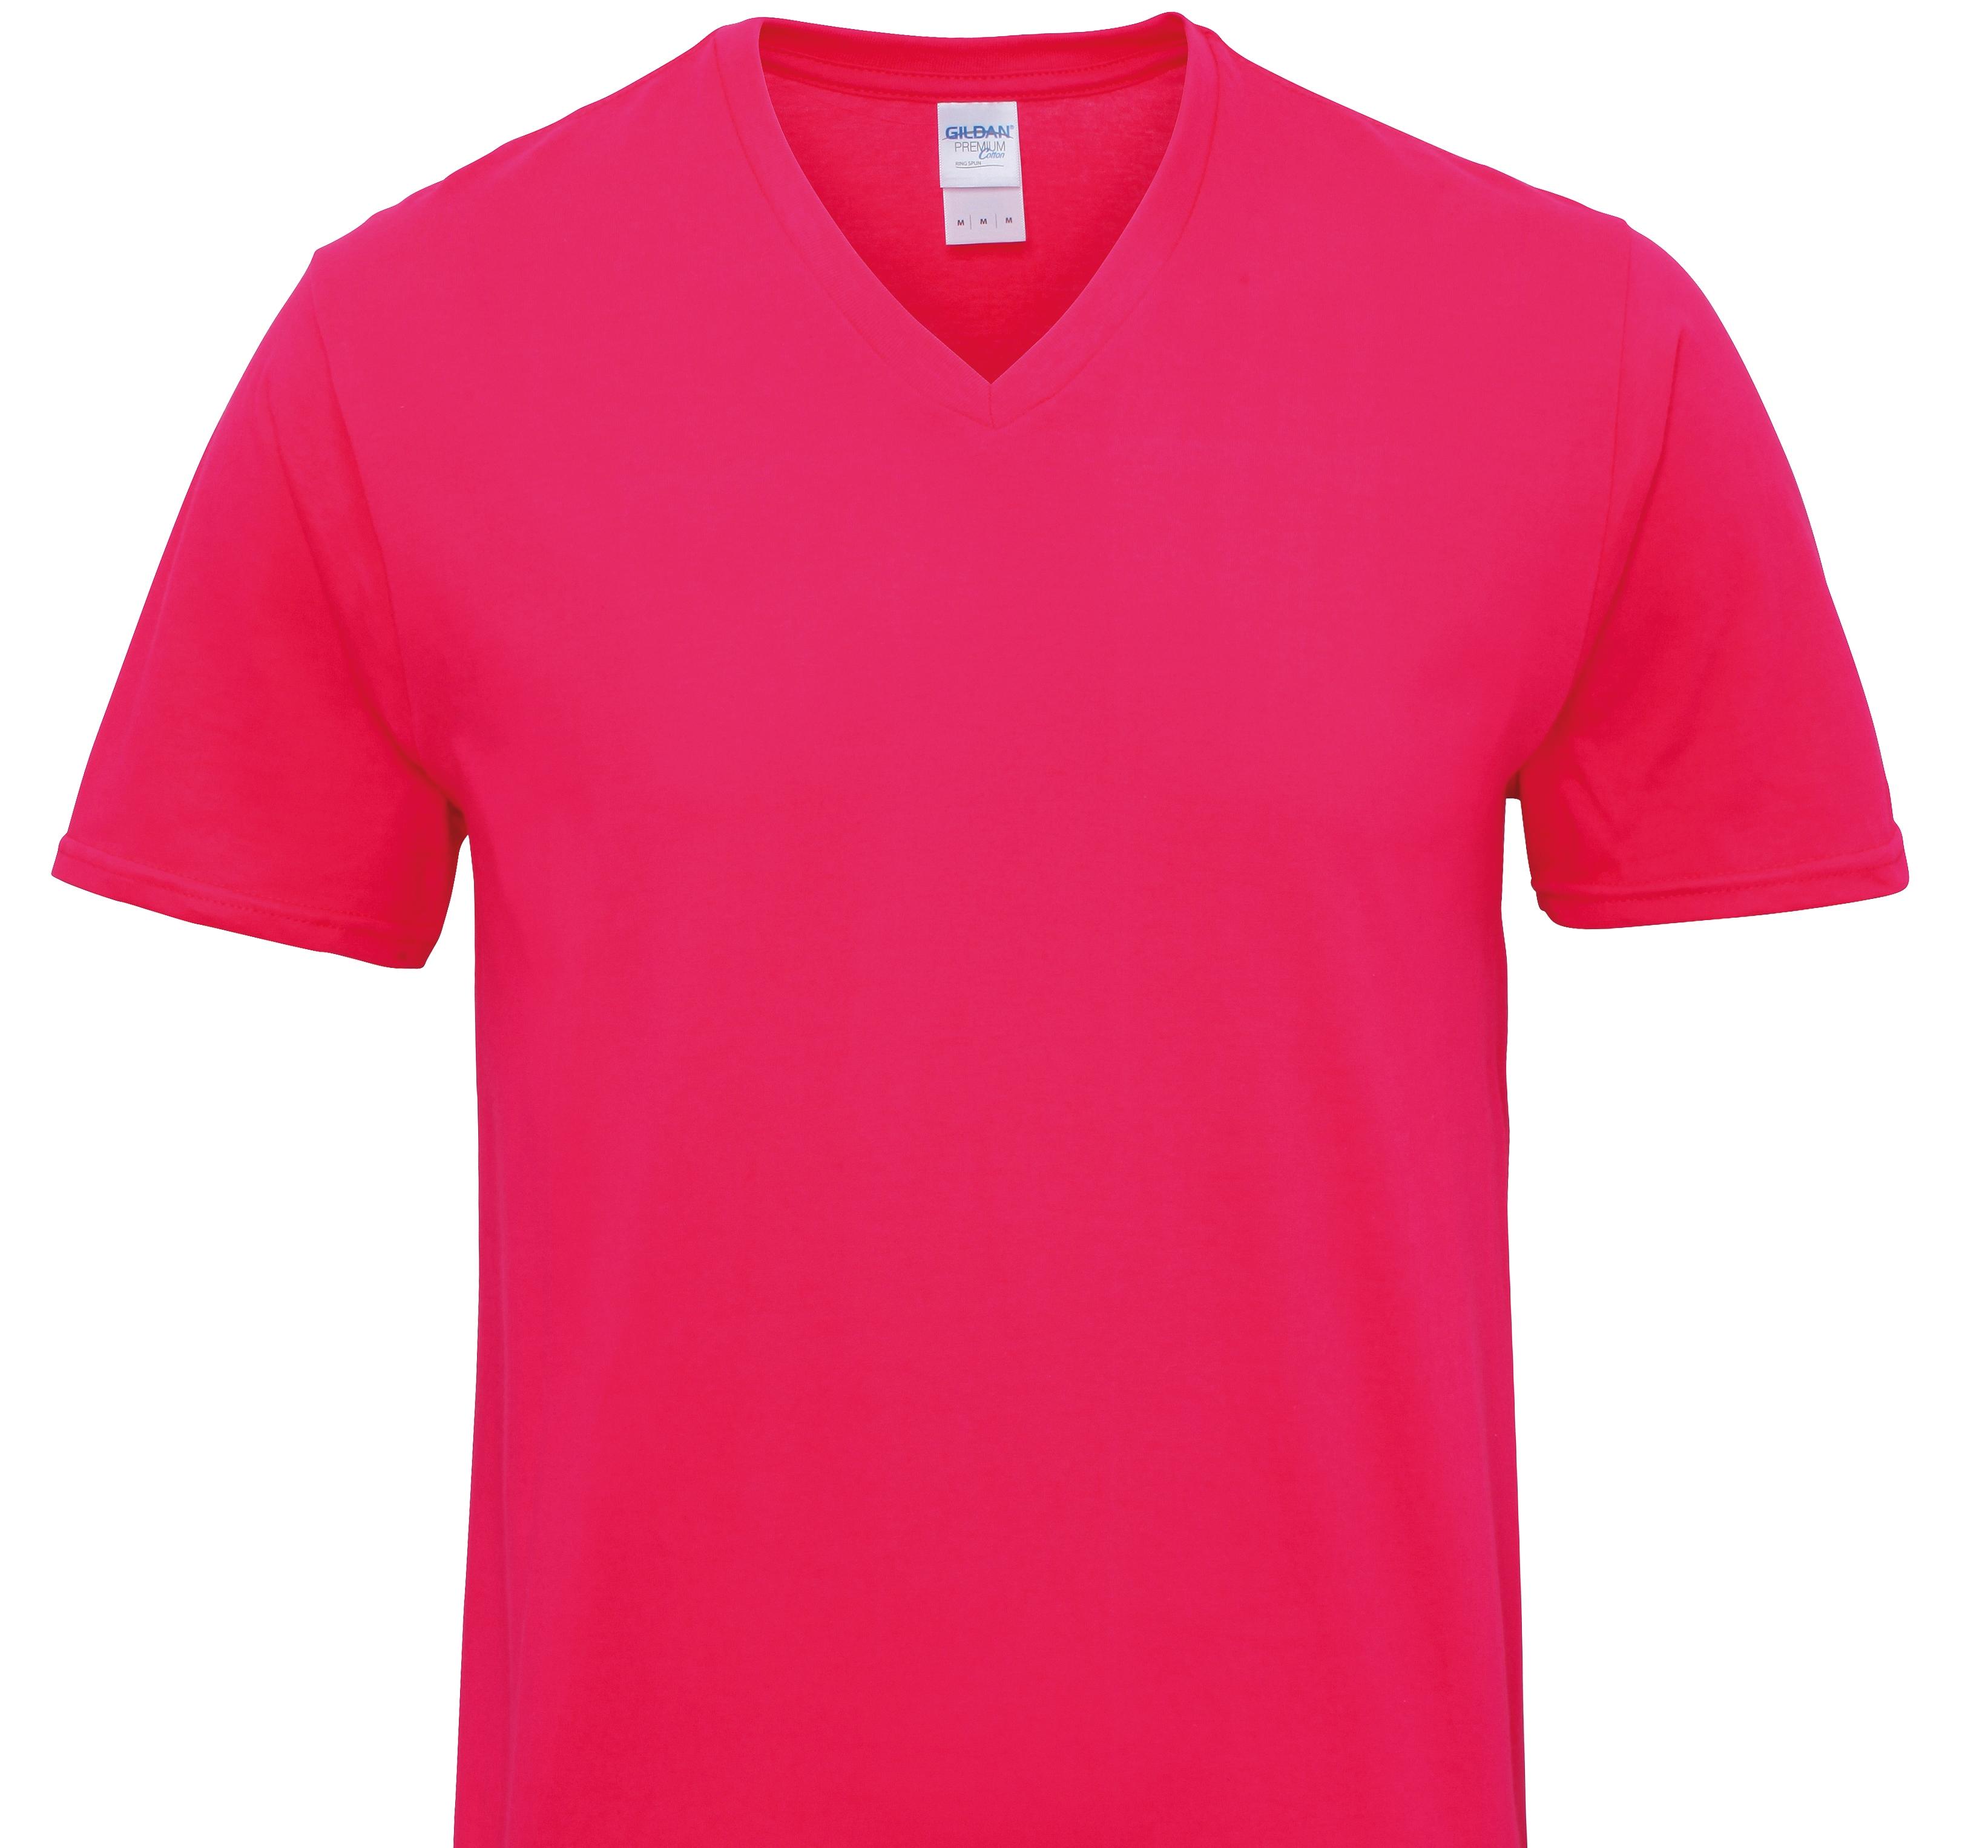 Working Springer Spaniel T-Shirts Women's V Neck Premium Cotton